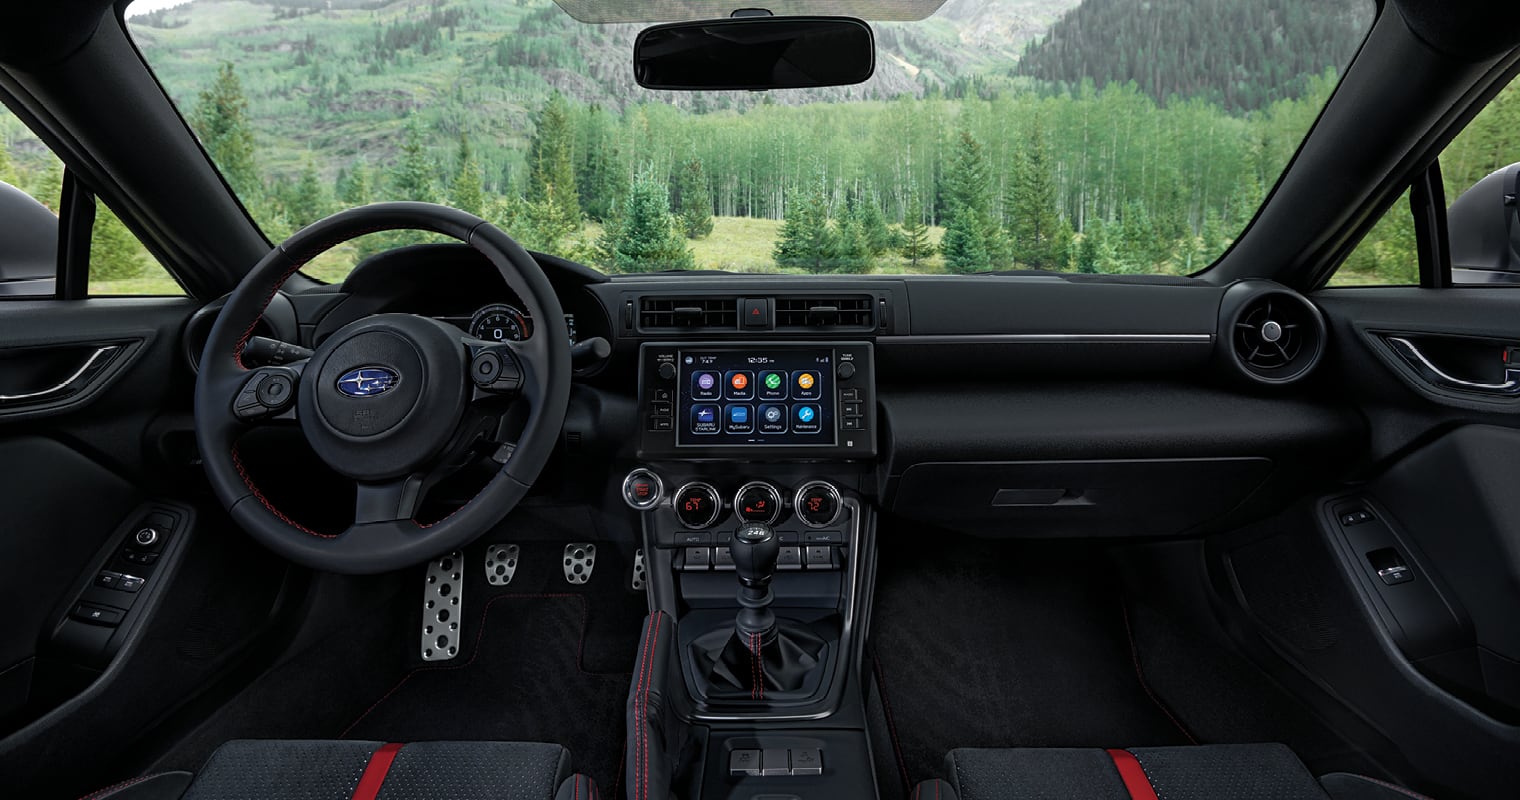 2022 Subaru BRZ interior and infotainment